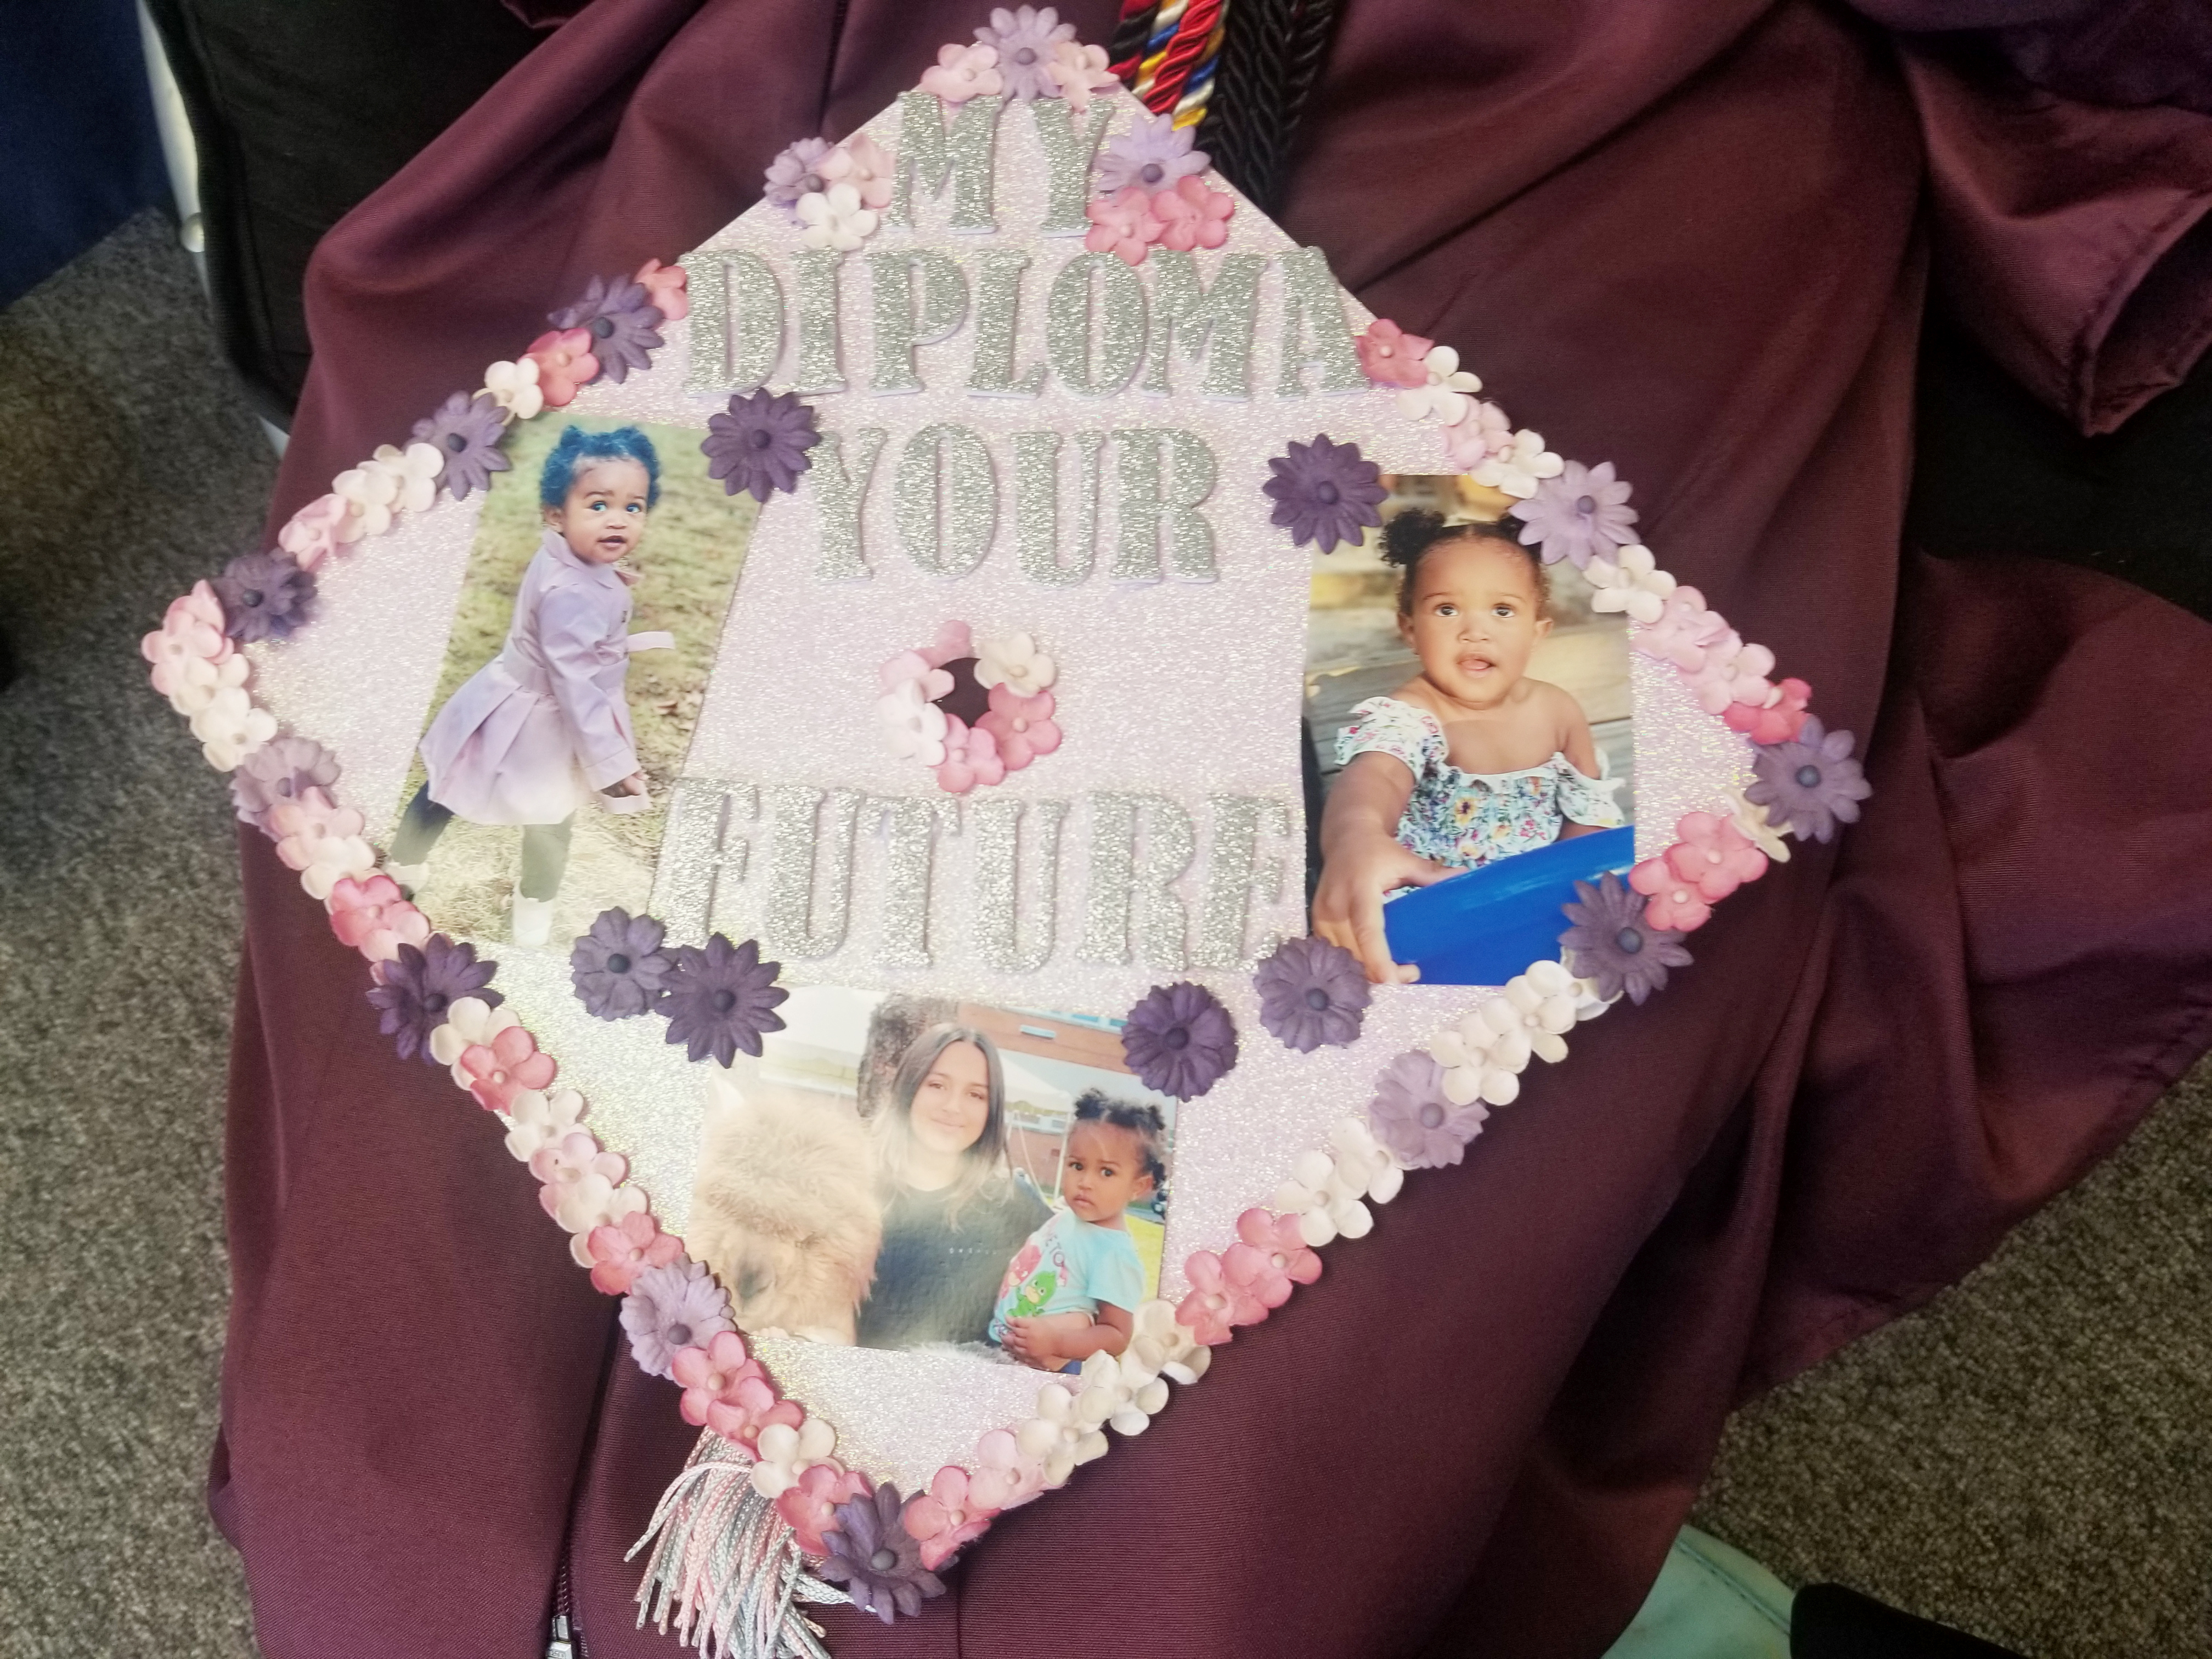 Anyeli's graduation cap displays photos of her daughter and says "My diploma, your future."